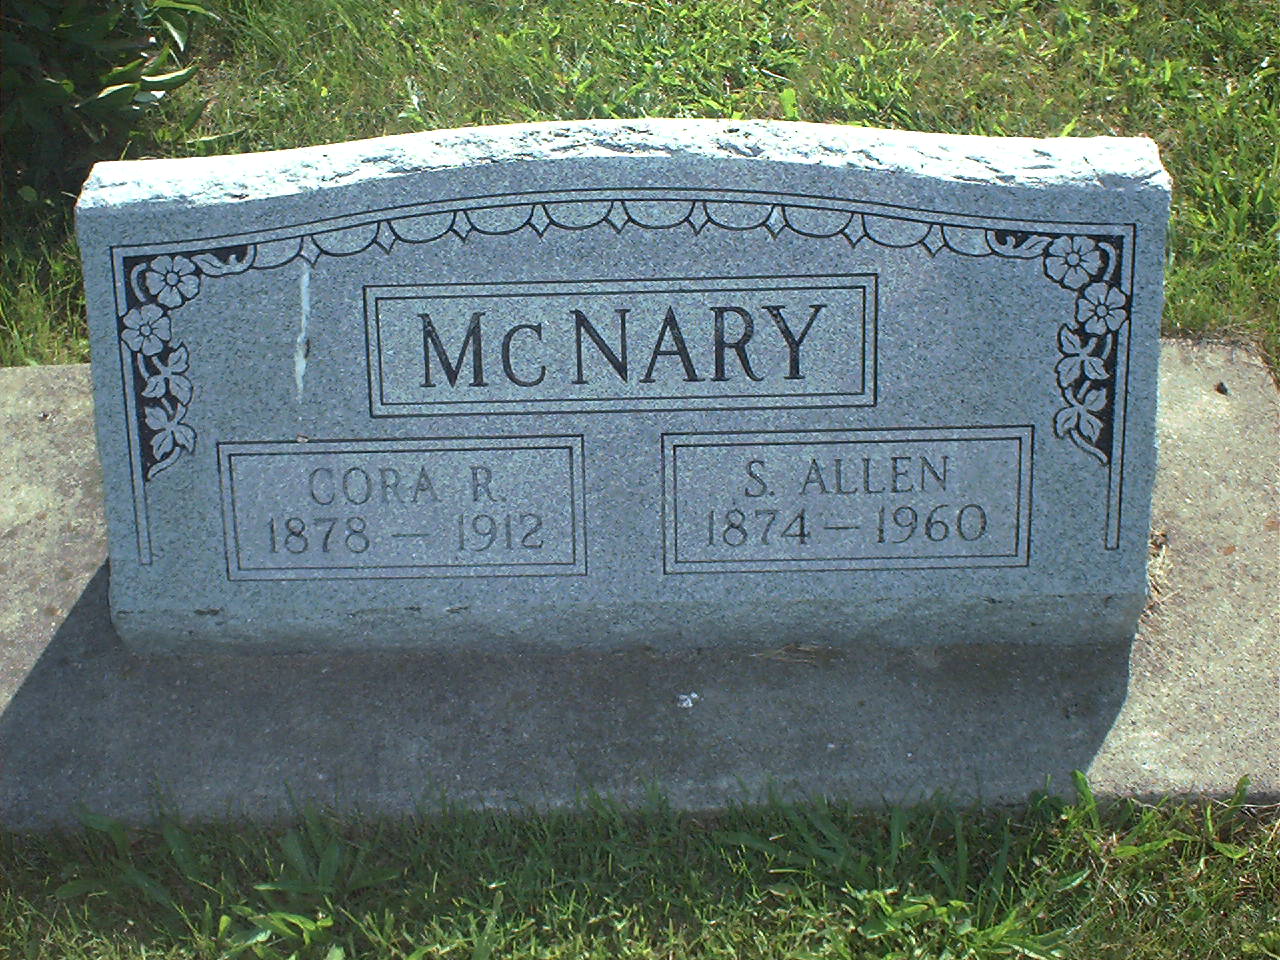 S. Allen McNary headstone